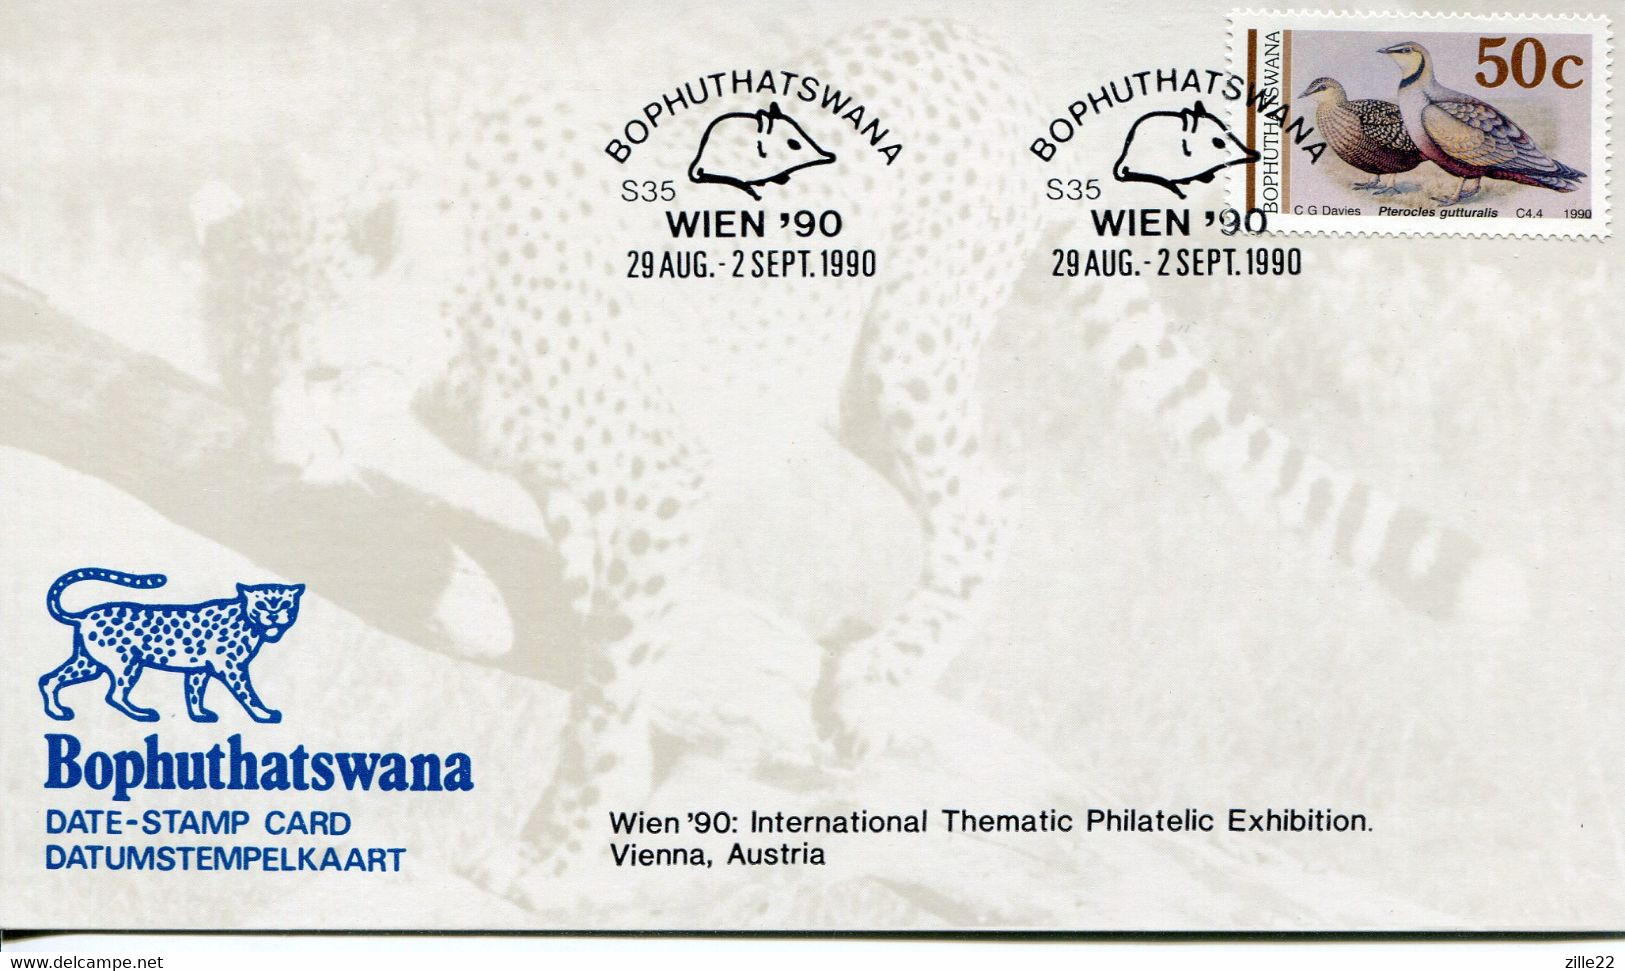 South Africa Bophuthatswana - Date-stamp Card - Stempelkarte - Fauna Small Mammal - Bophuthatswana